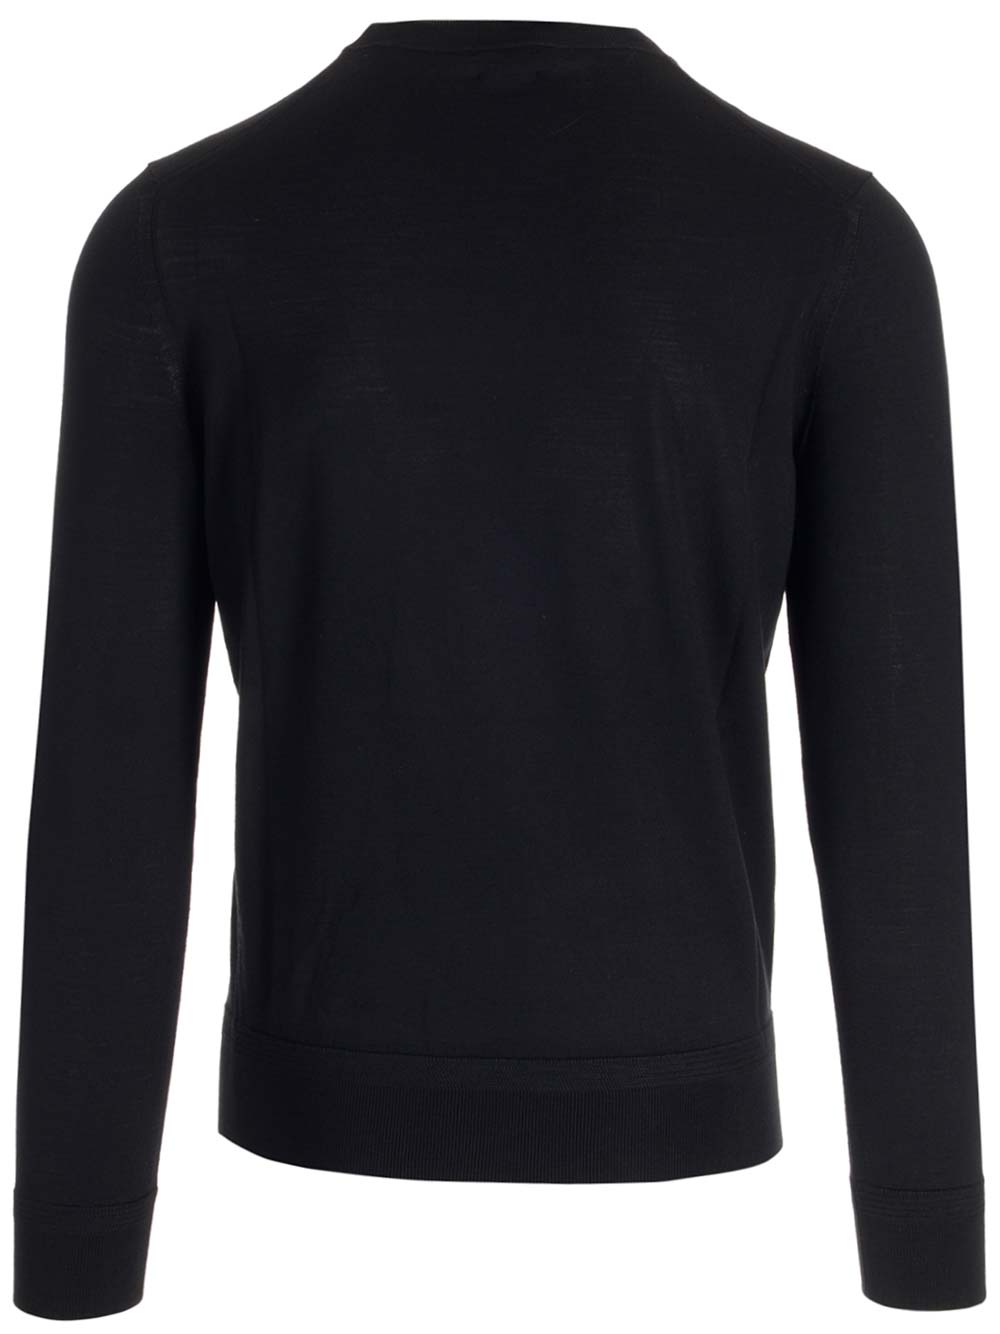 Shop Tom Ford Black Wool Sweater